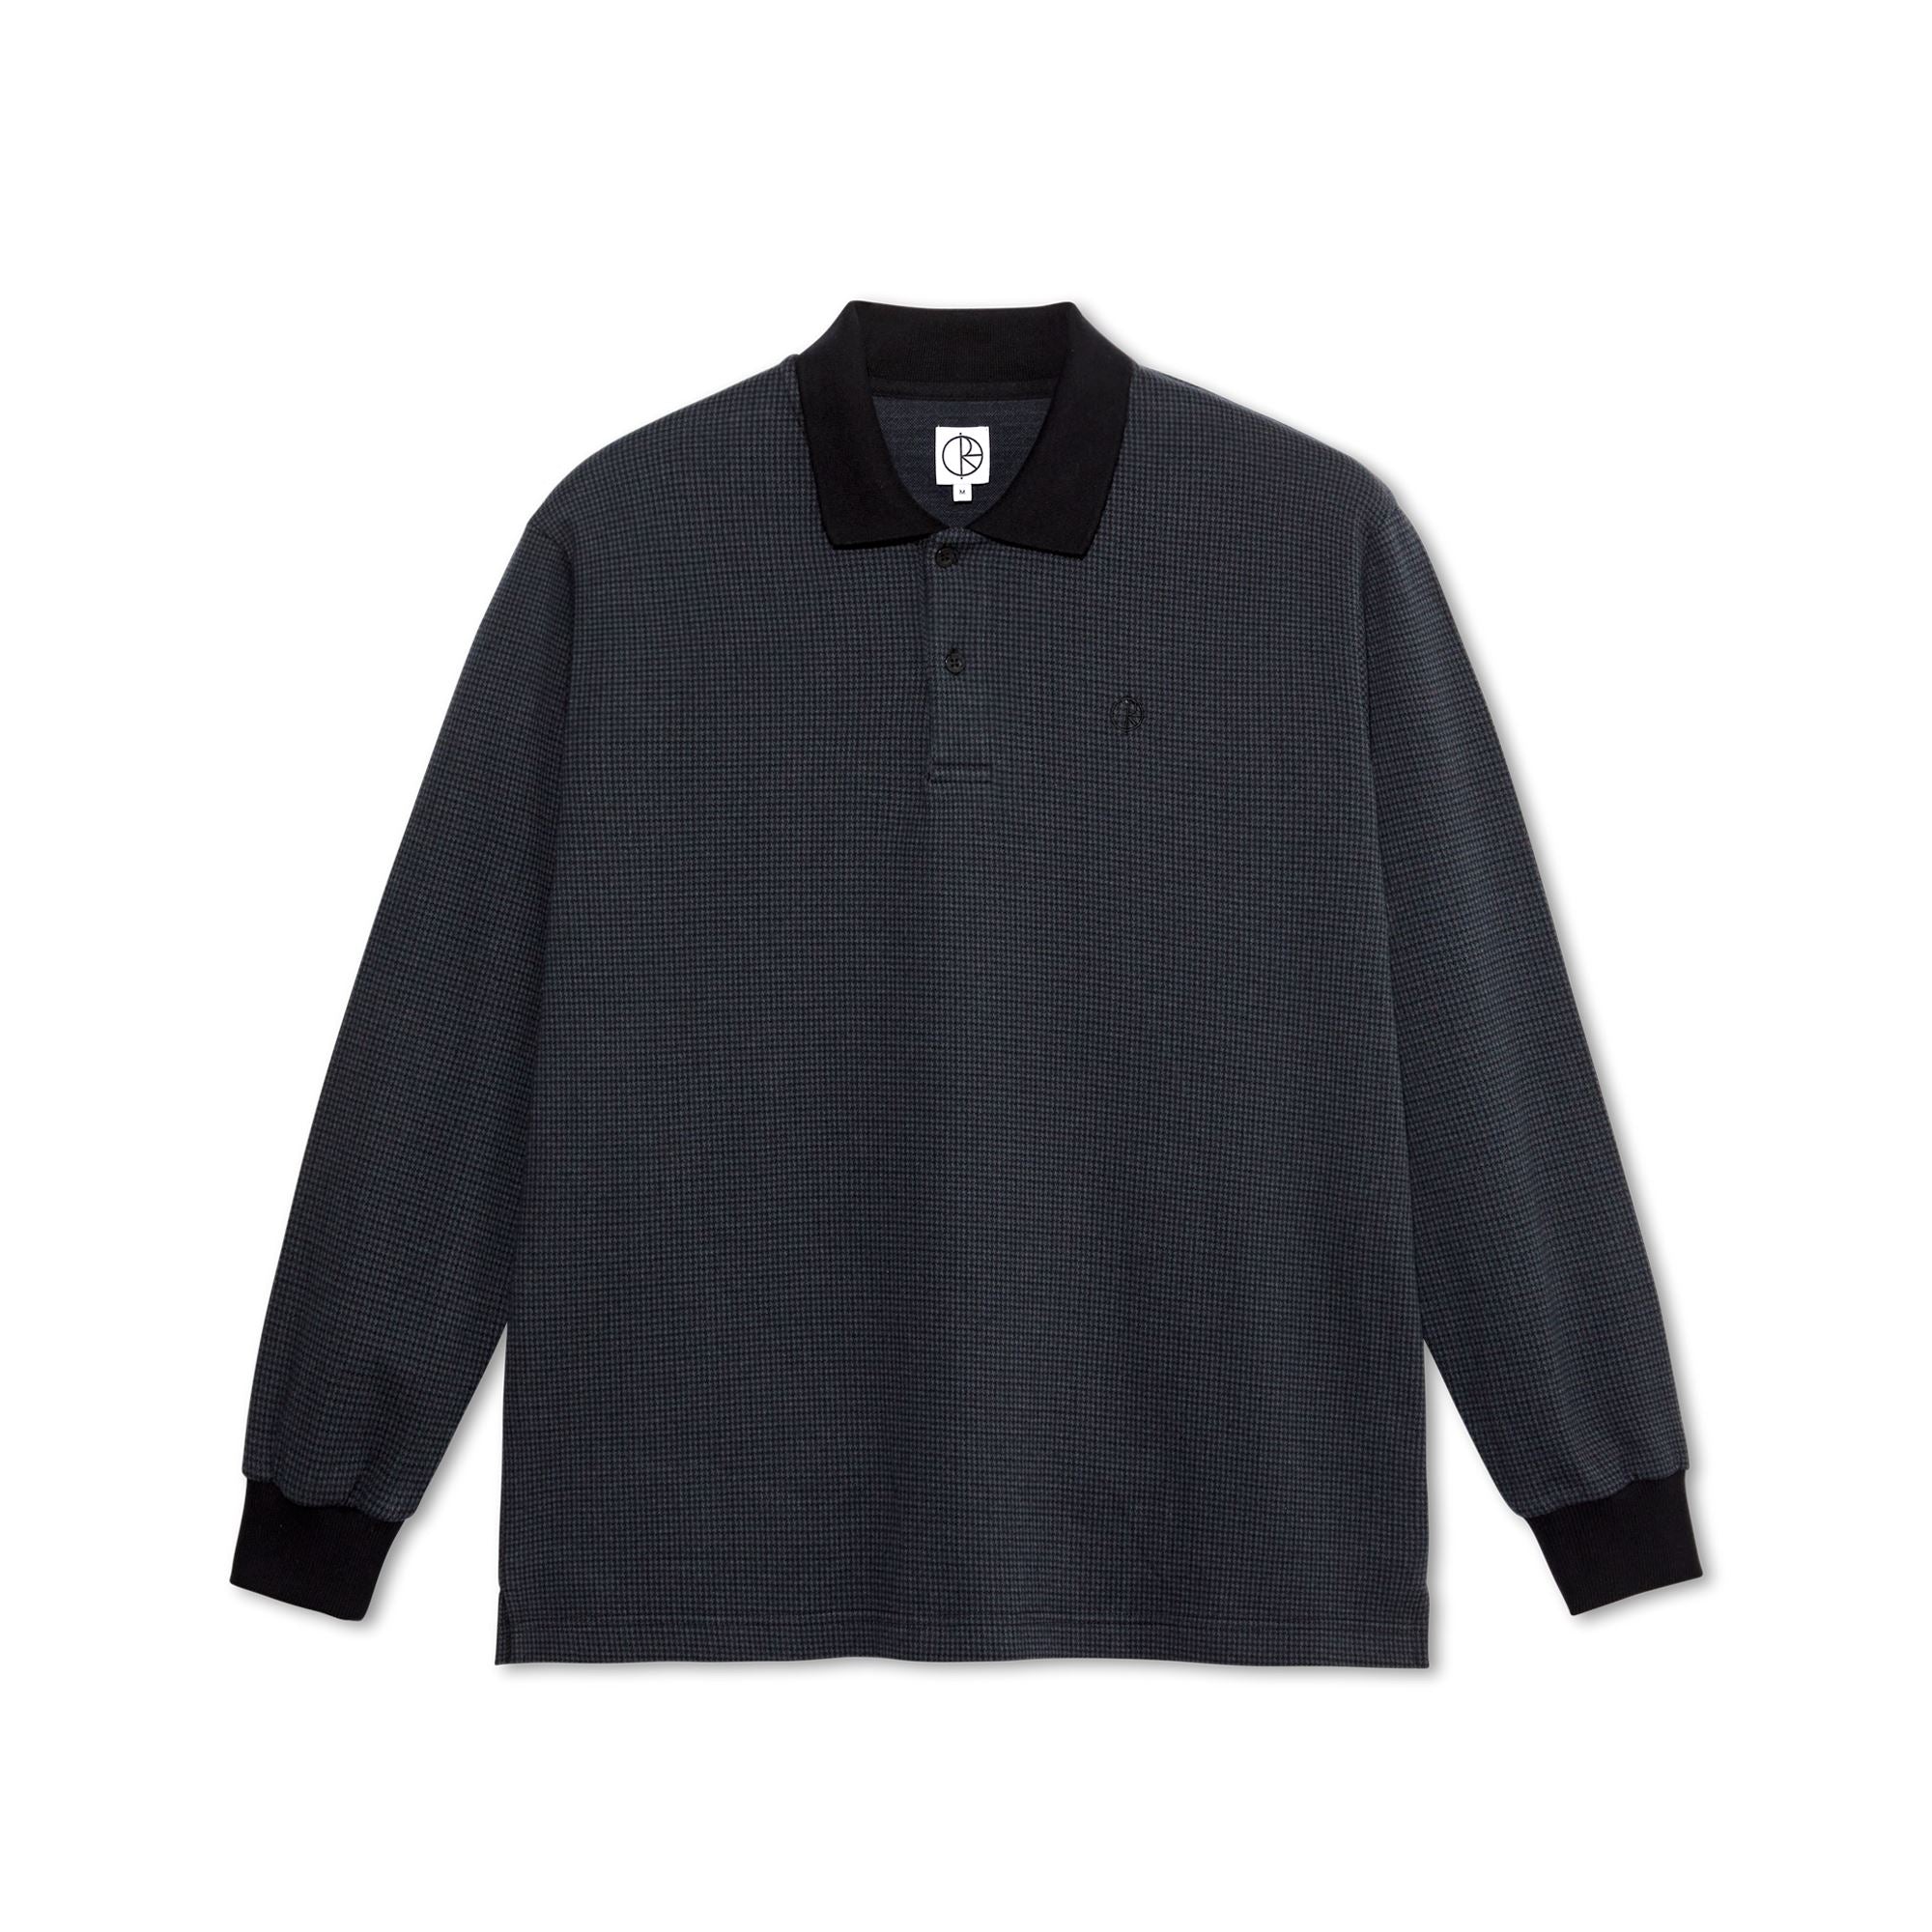 Polar L/S Polo Shirt Houndstooth Black/Grey shirts Polar Skate Co 